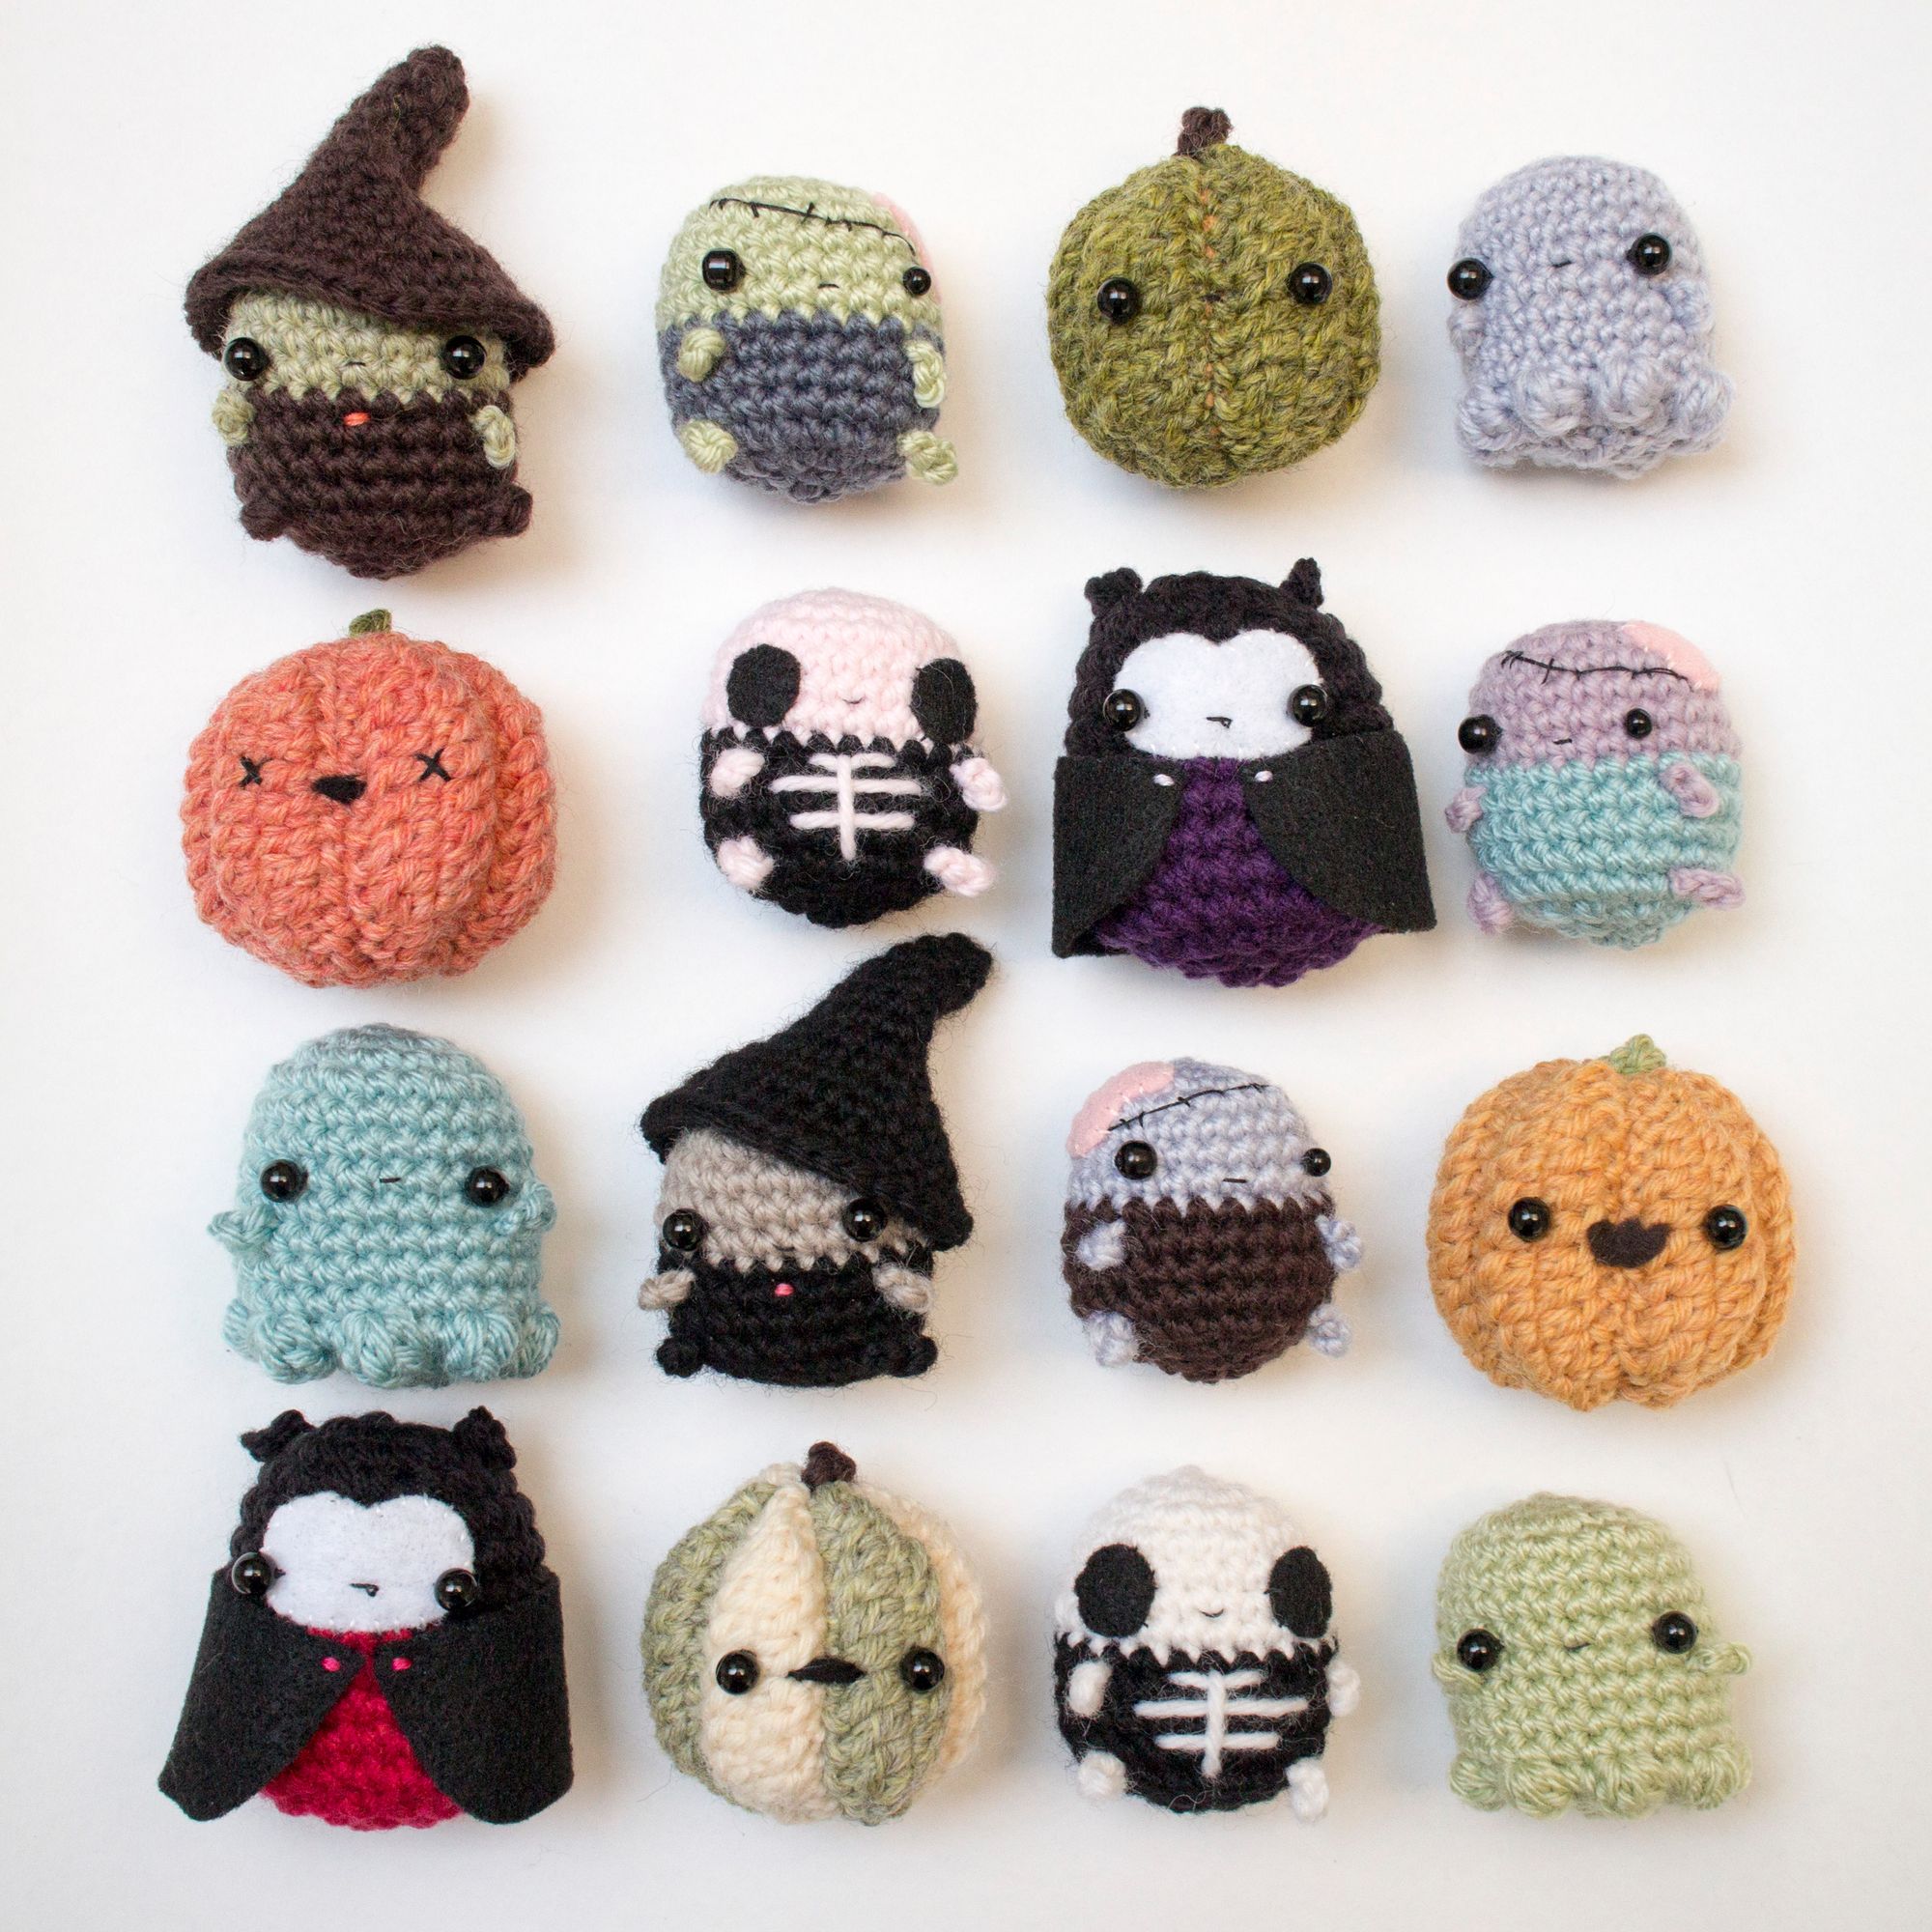 Mini Halloween Crochet Patterns